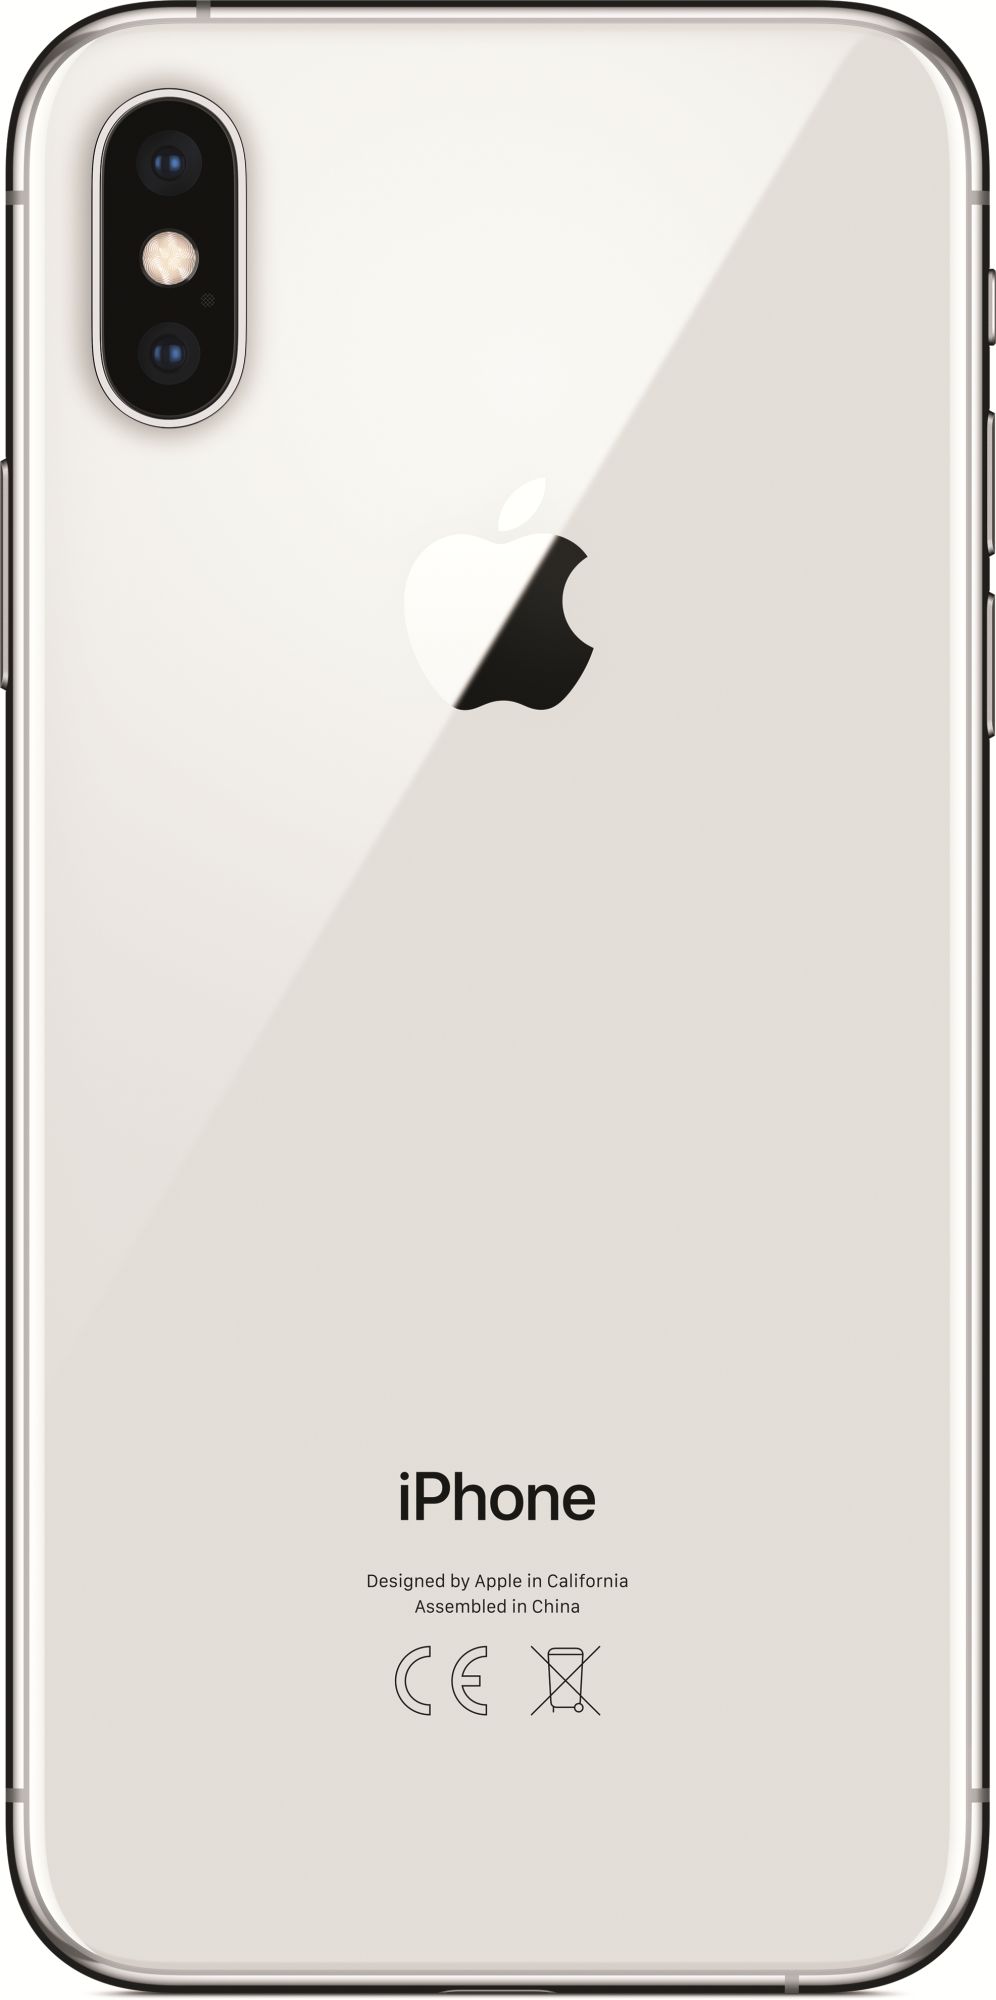 Apple iPhone Xs 64GB Silver